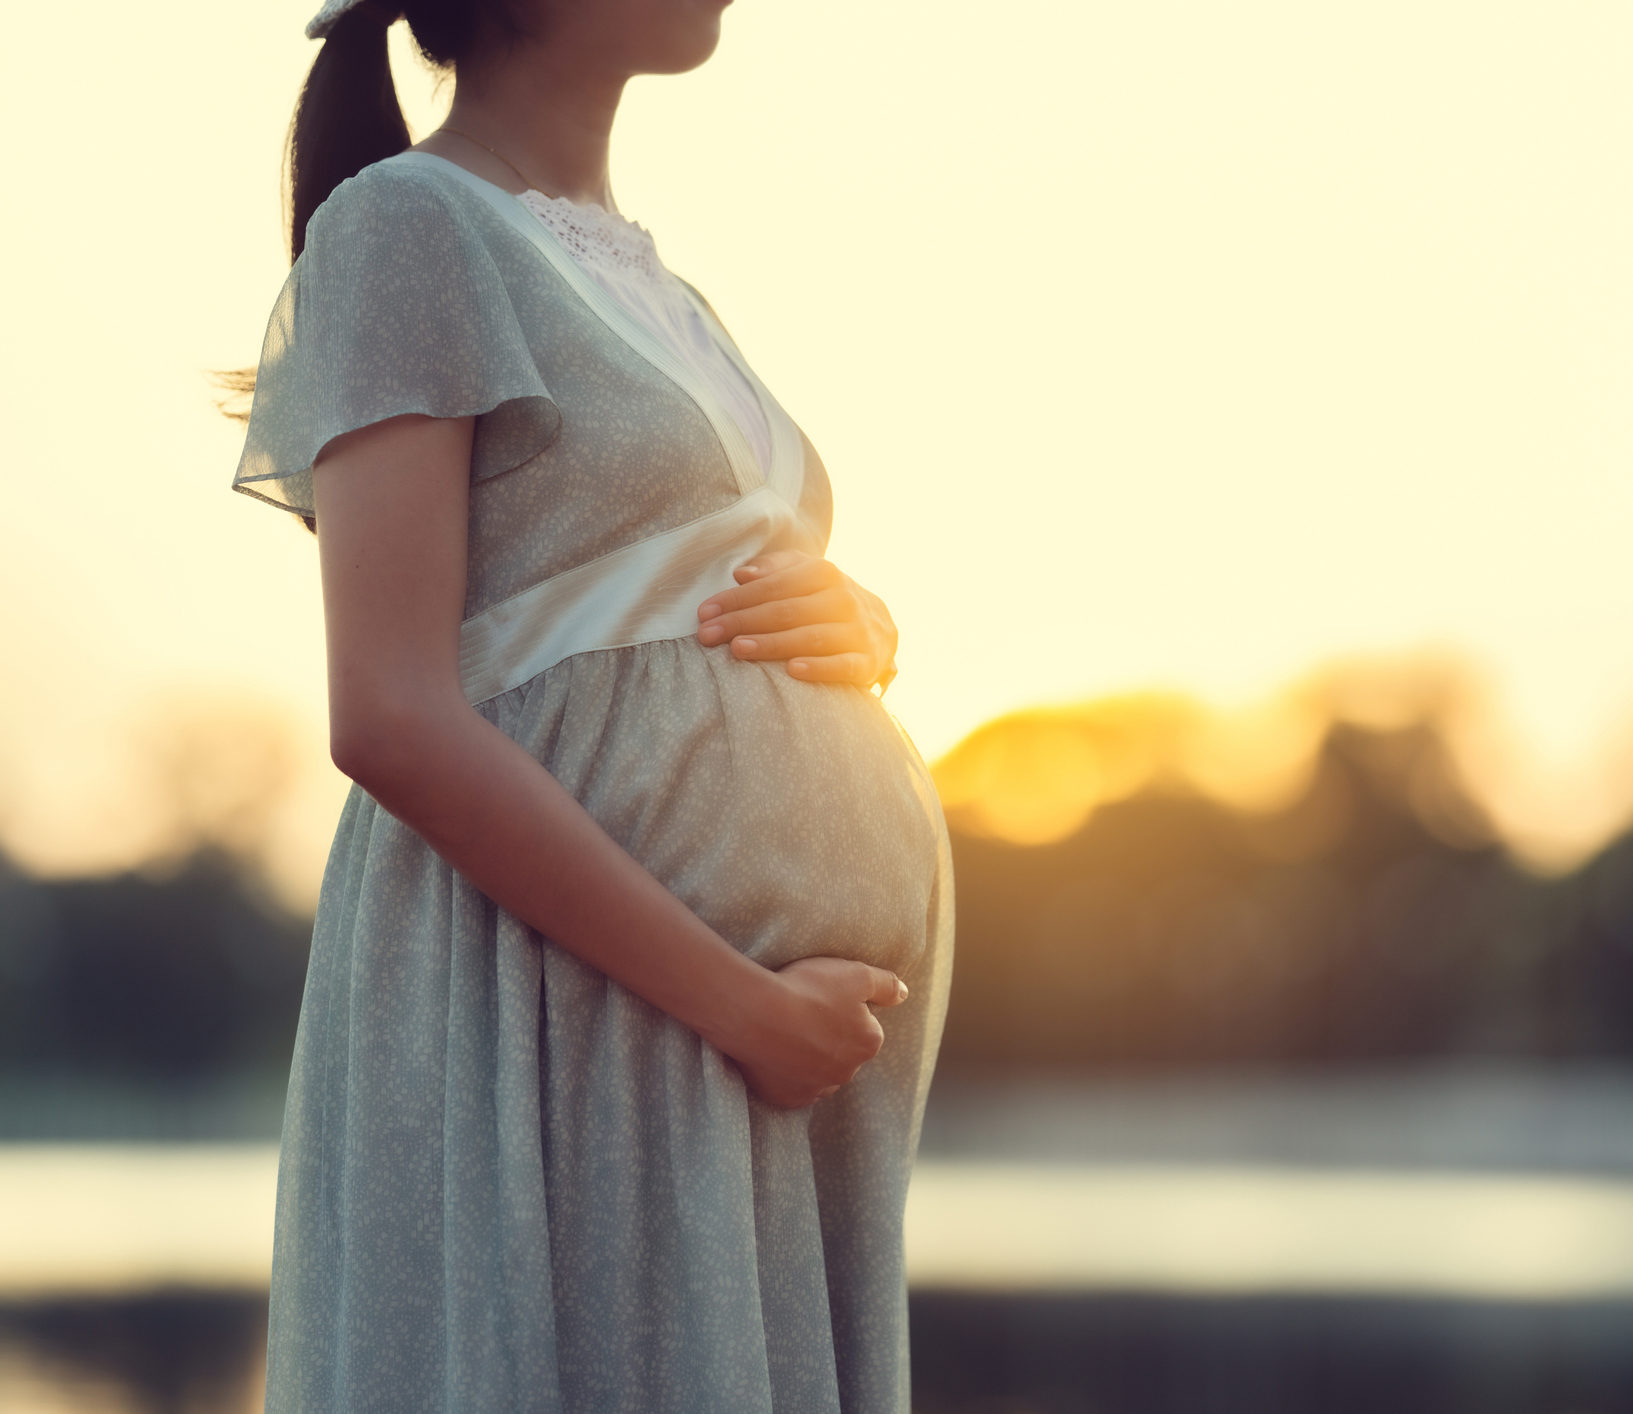 Pregnant considering adoption